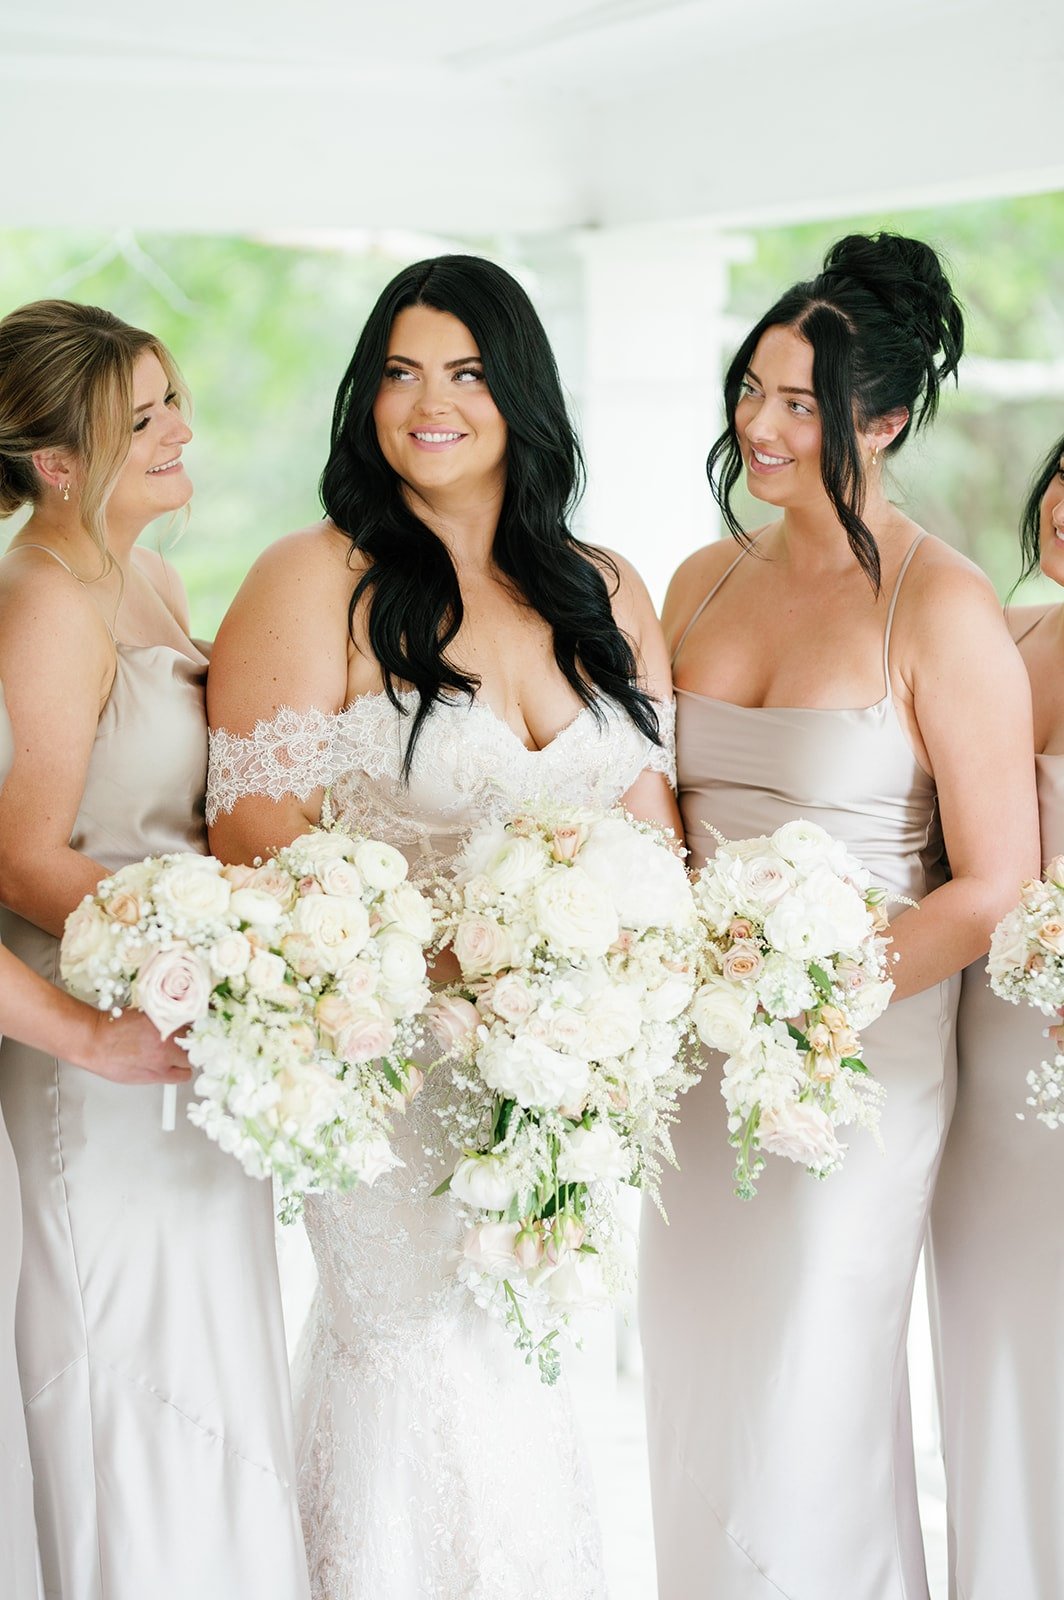 nashville wedding florist - all white wedding flowers 1.jpg